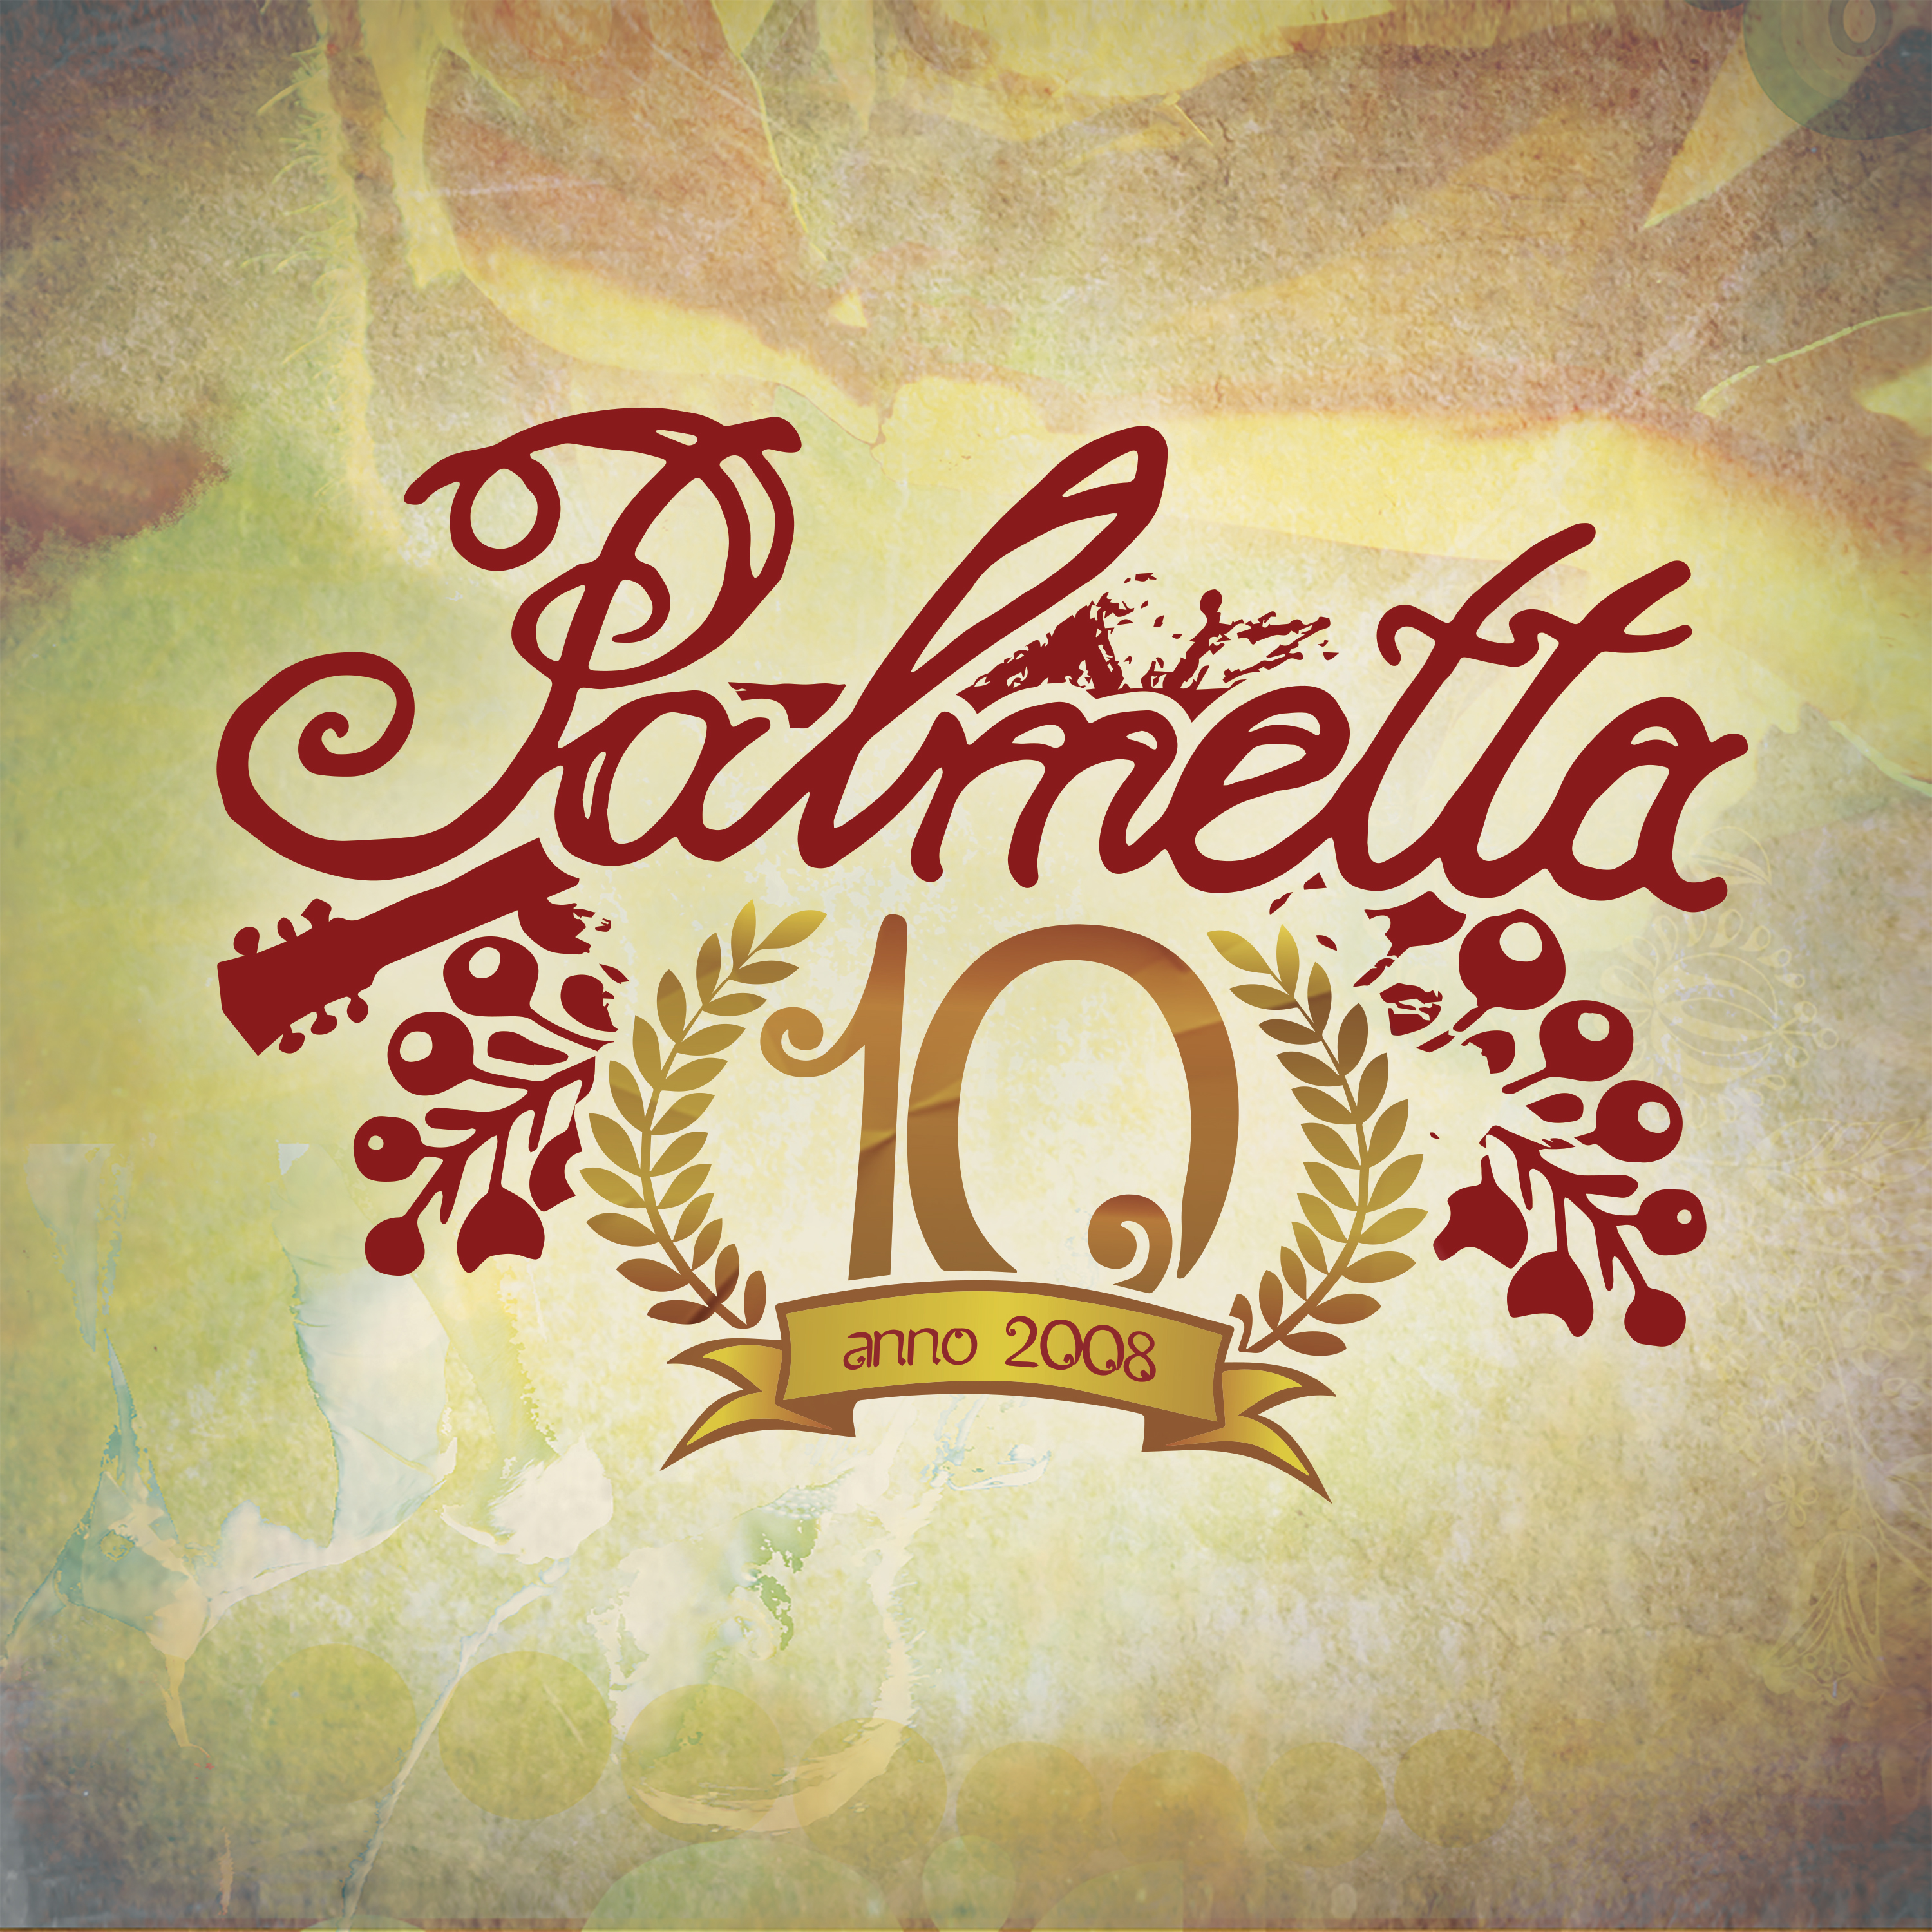 palmetta_kavalkad_cd_logo_01_3000x3000.jpg